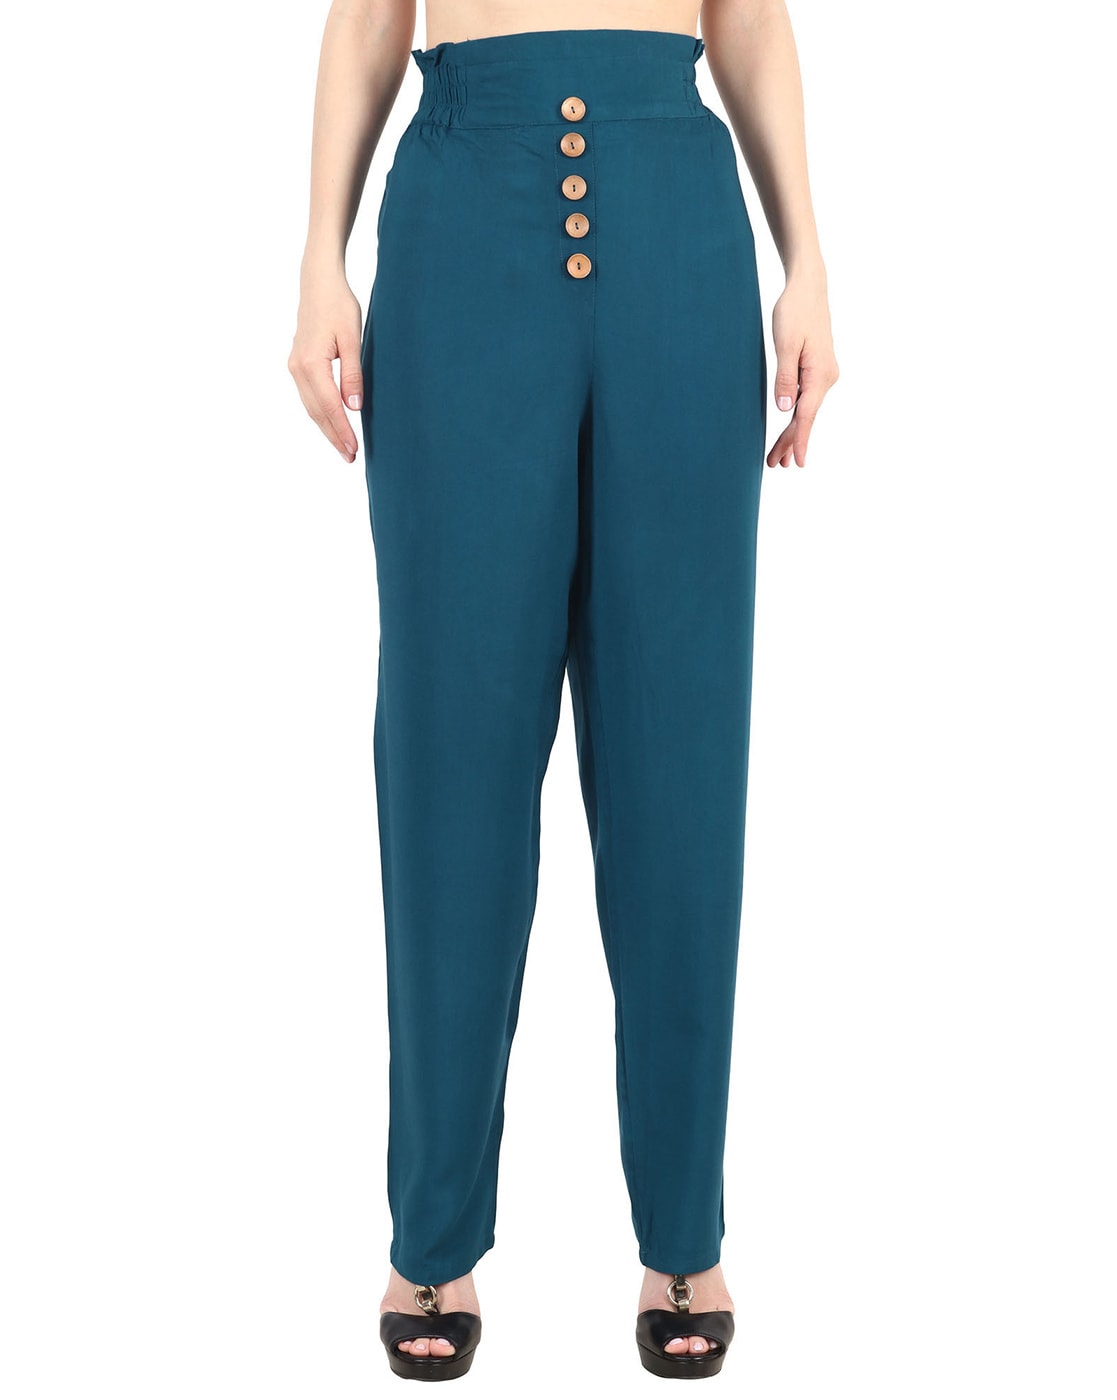 Buy Teal Blue Trousers & Pants for Women by POPWINGS Online | Ajio.com